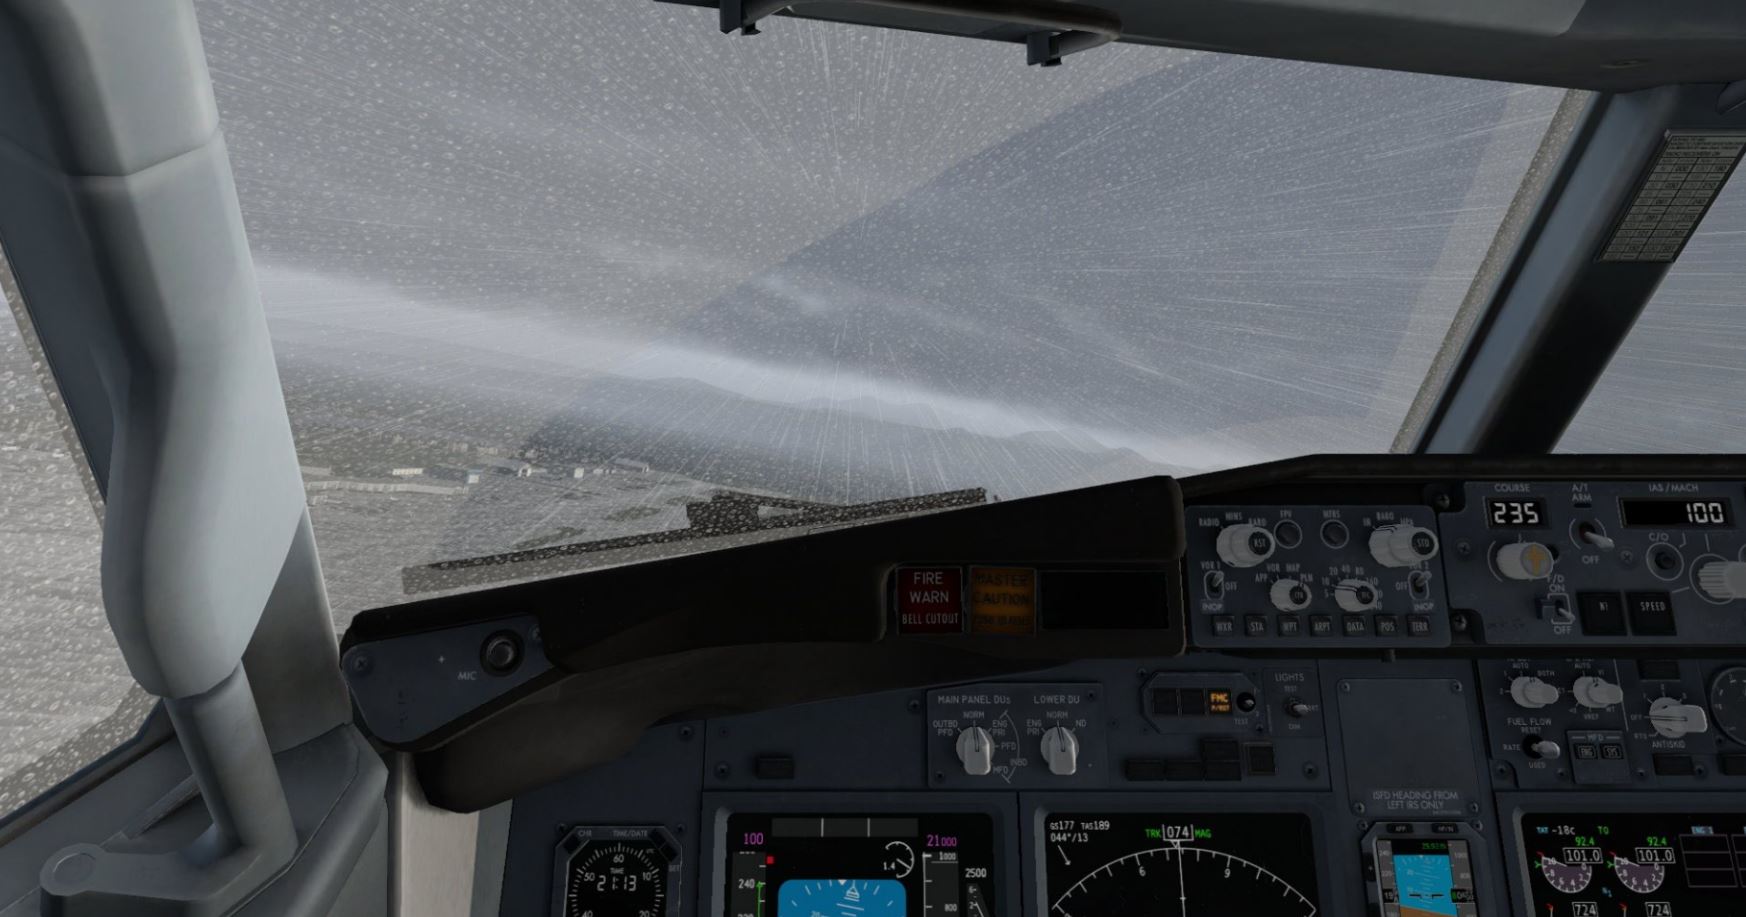 【X-Plane 11.20】免费的 Zibo Mod B738 竟然有雨水效果!!-7119 